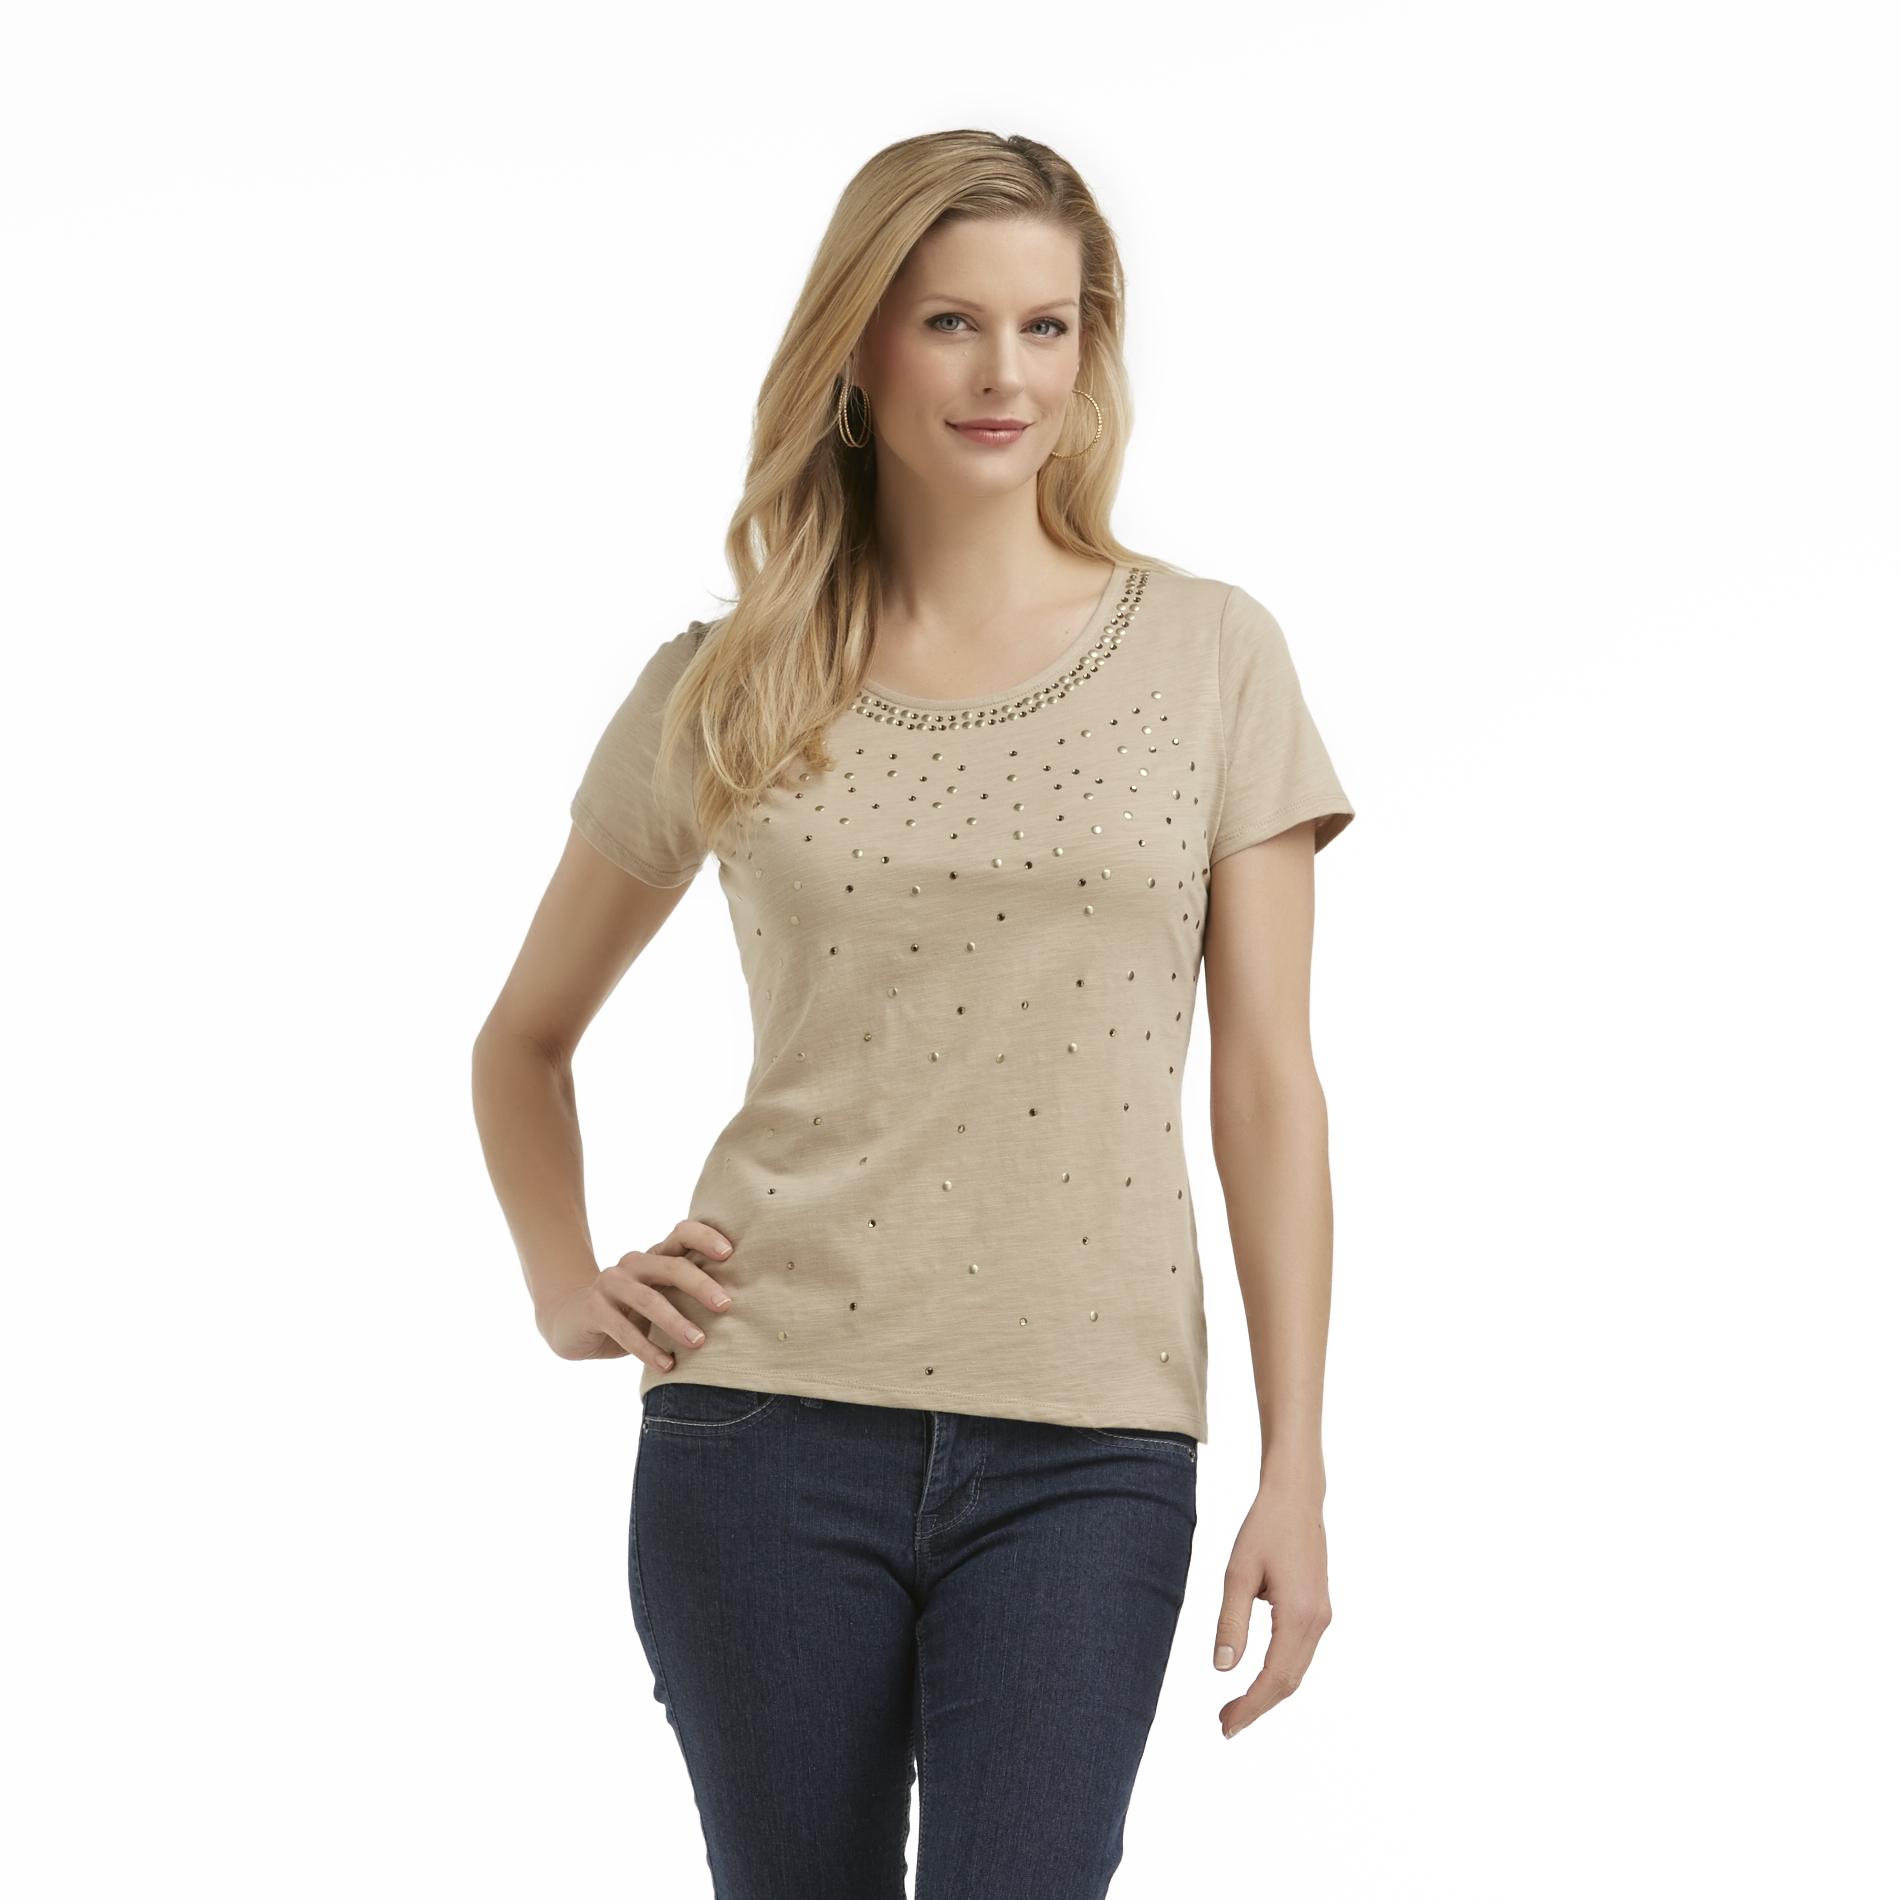 Jaclyn Smith Women's Rhinestone Embellished T-Shirt